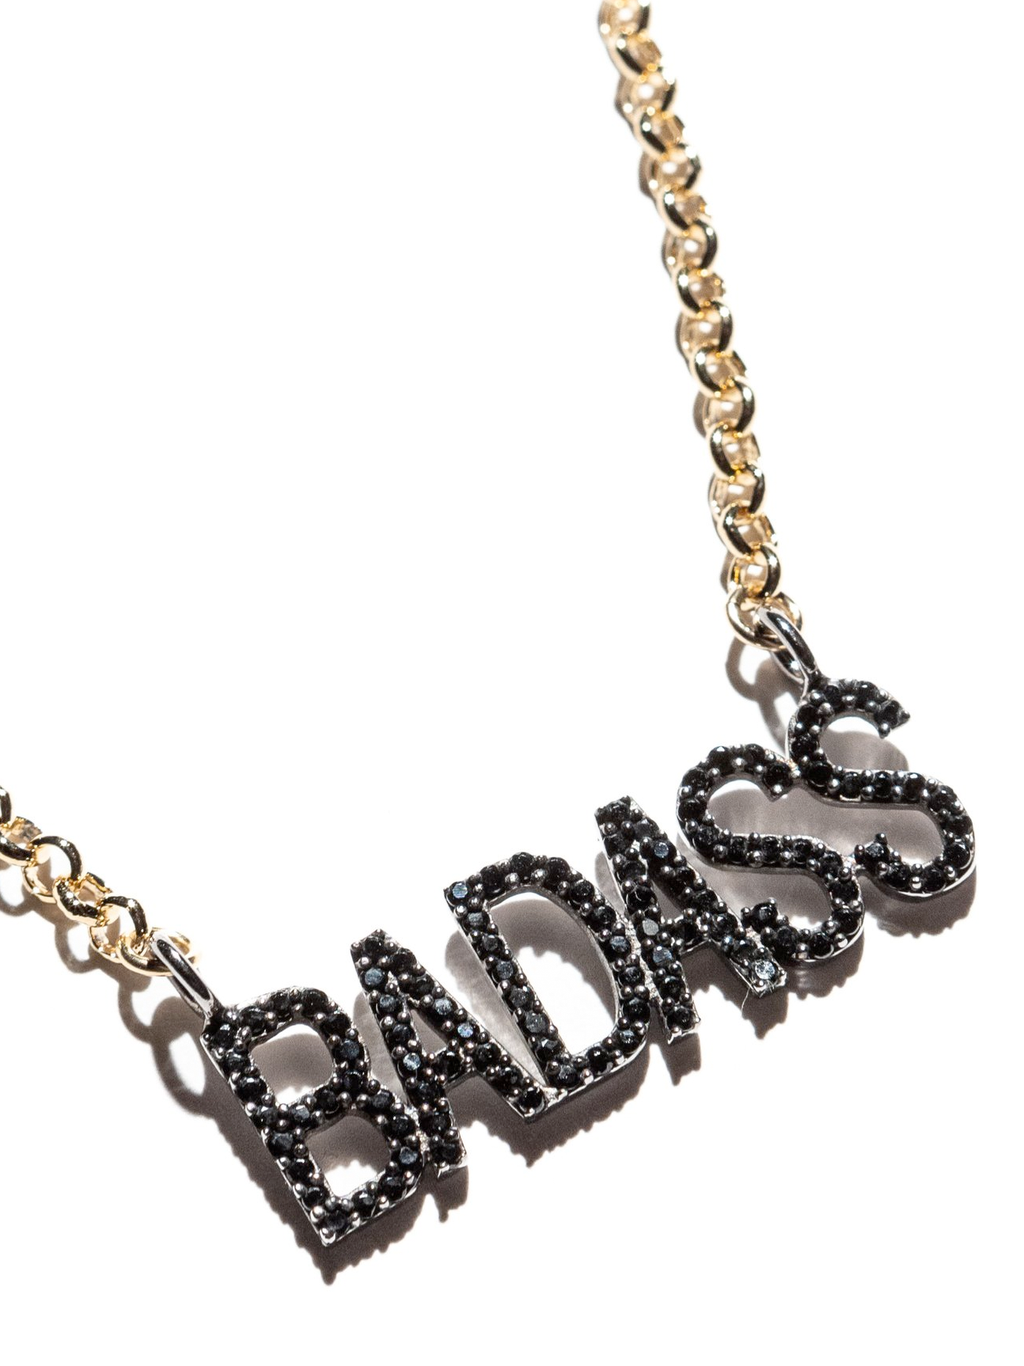 The Badass Necklace